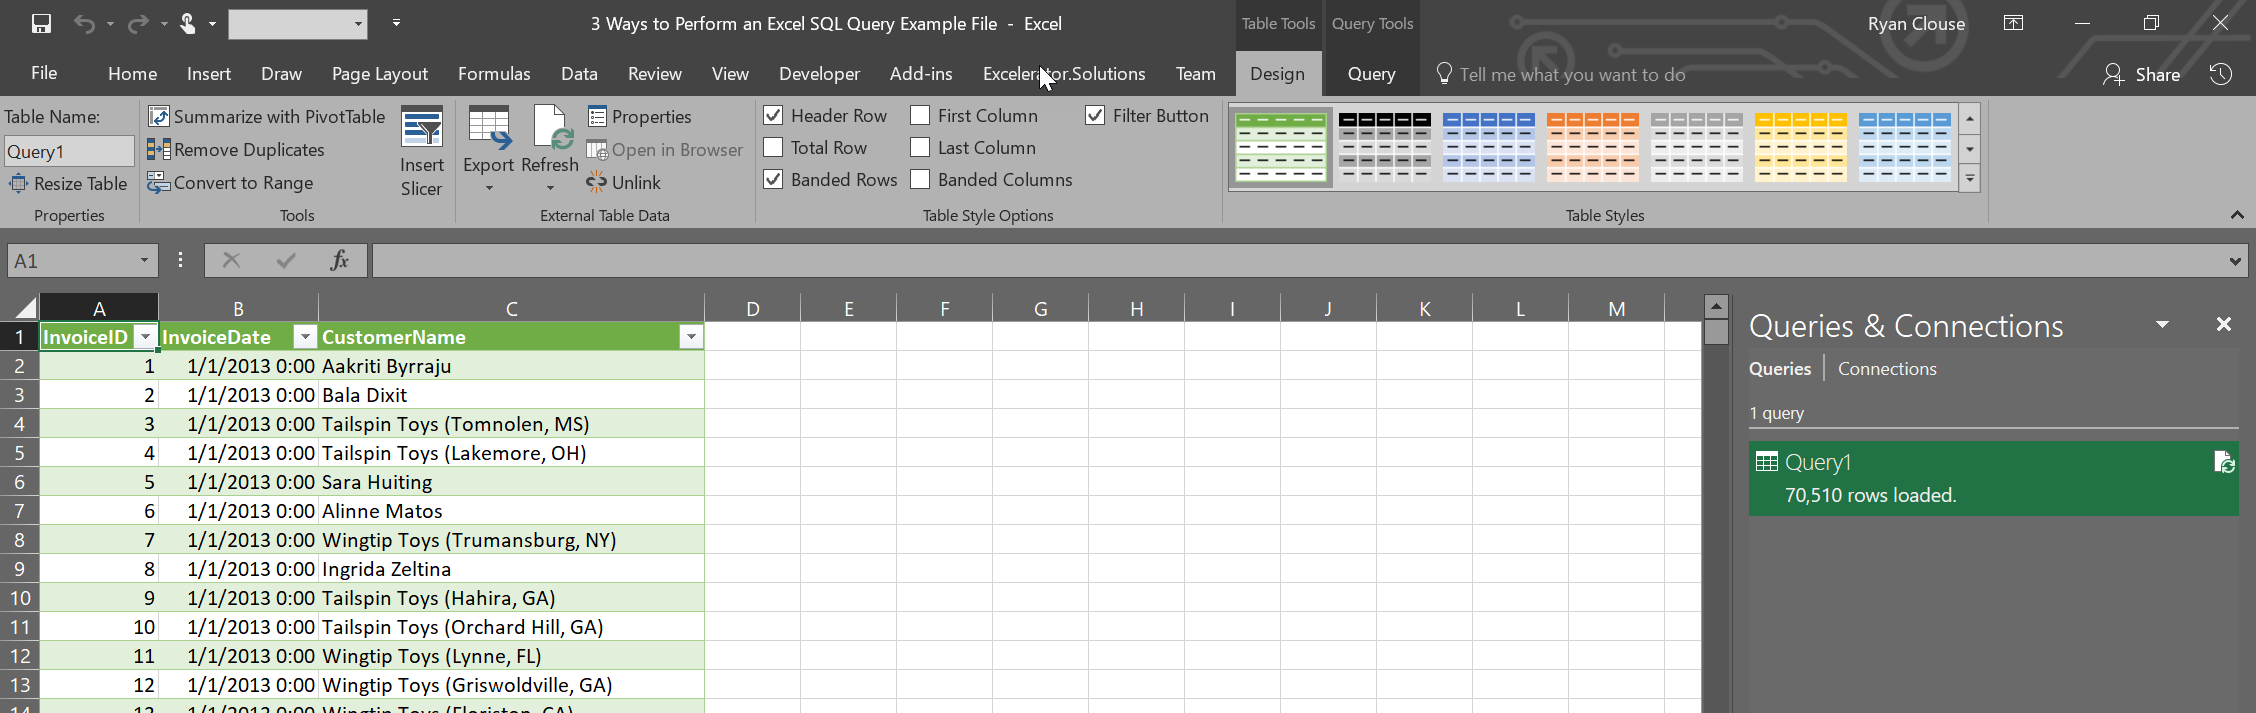 Excel SQL Query